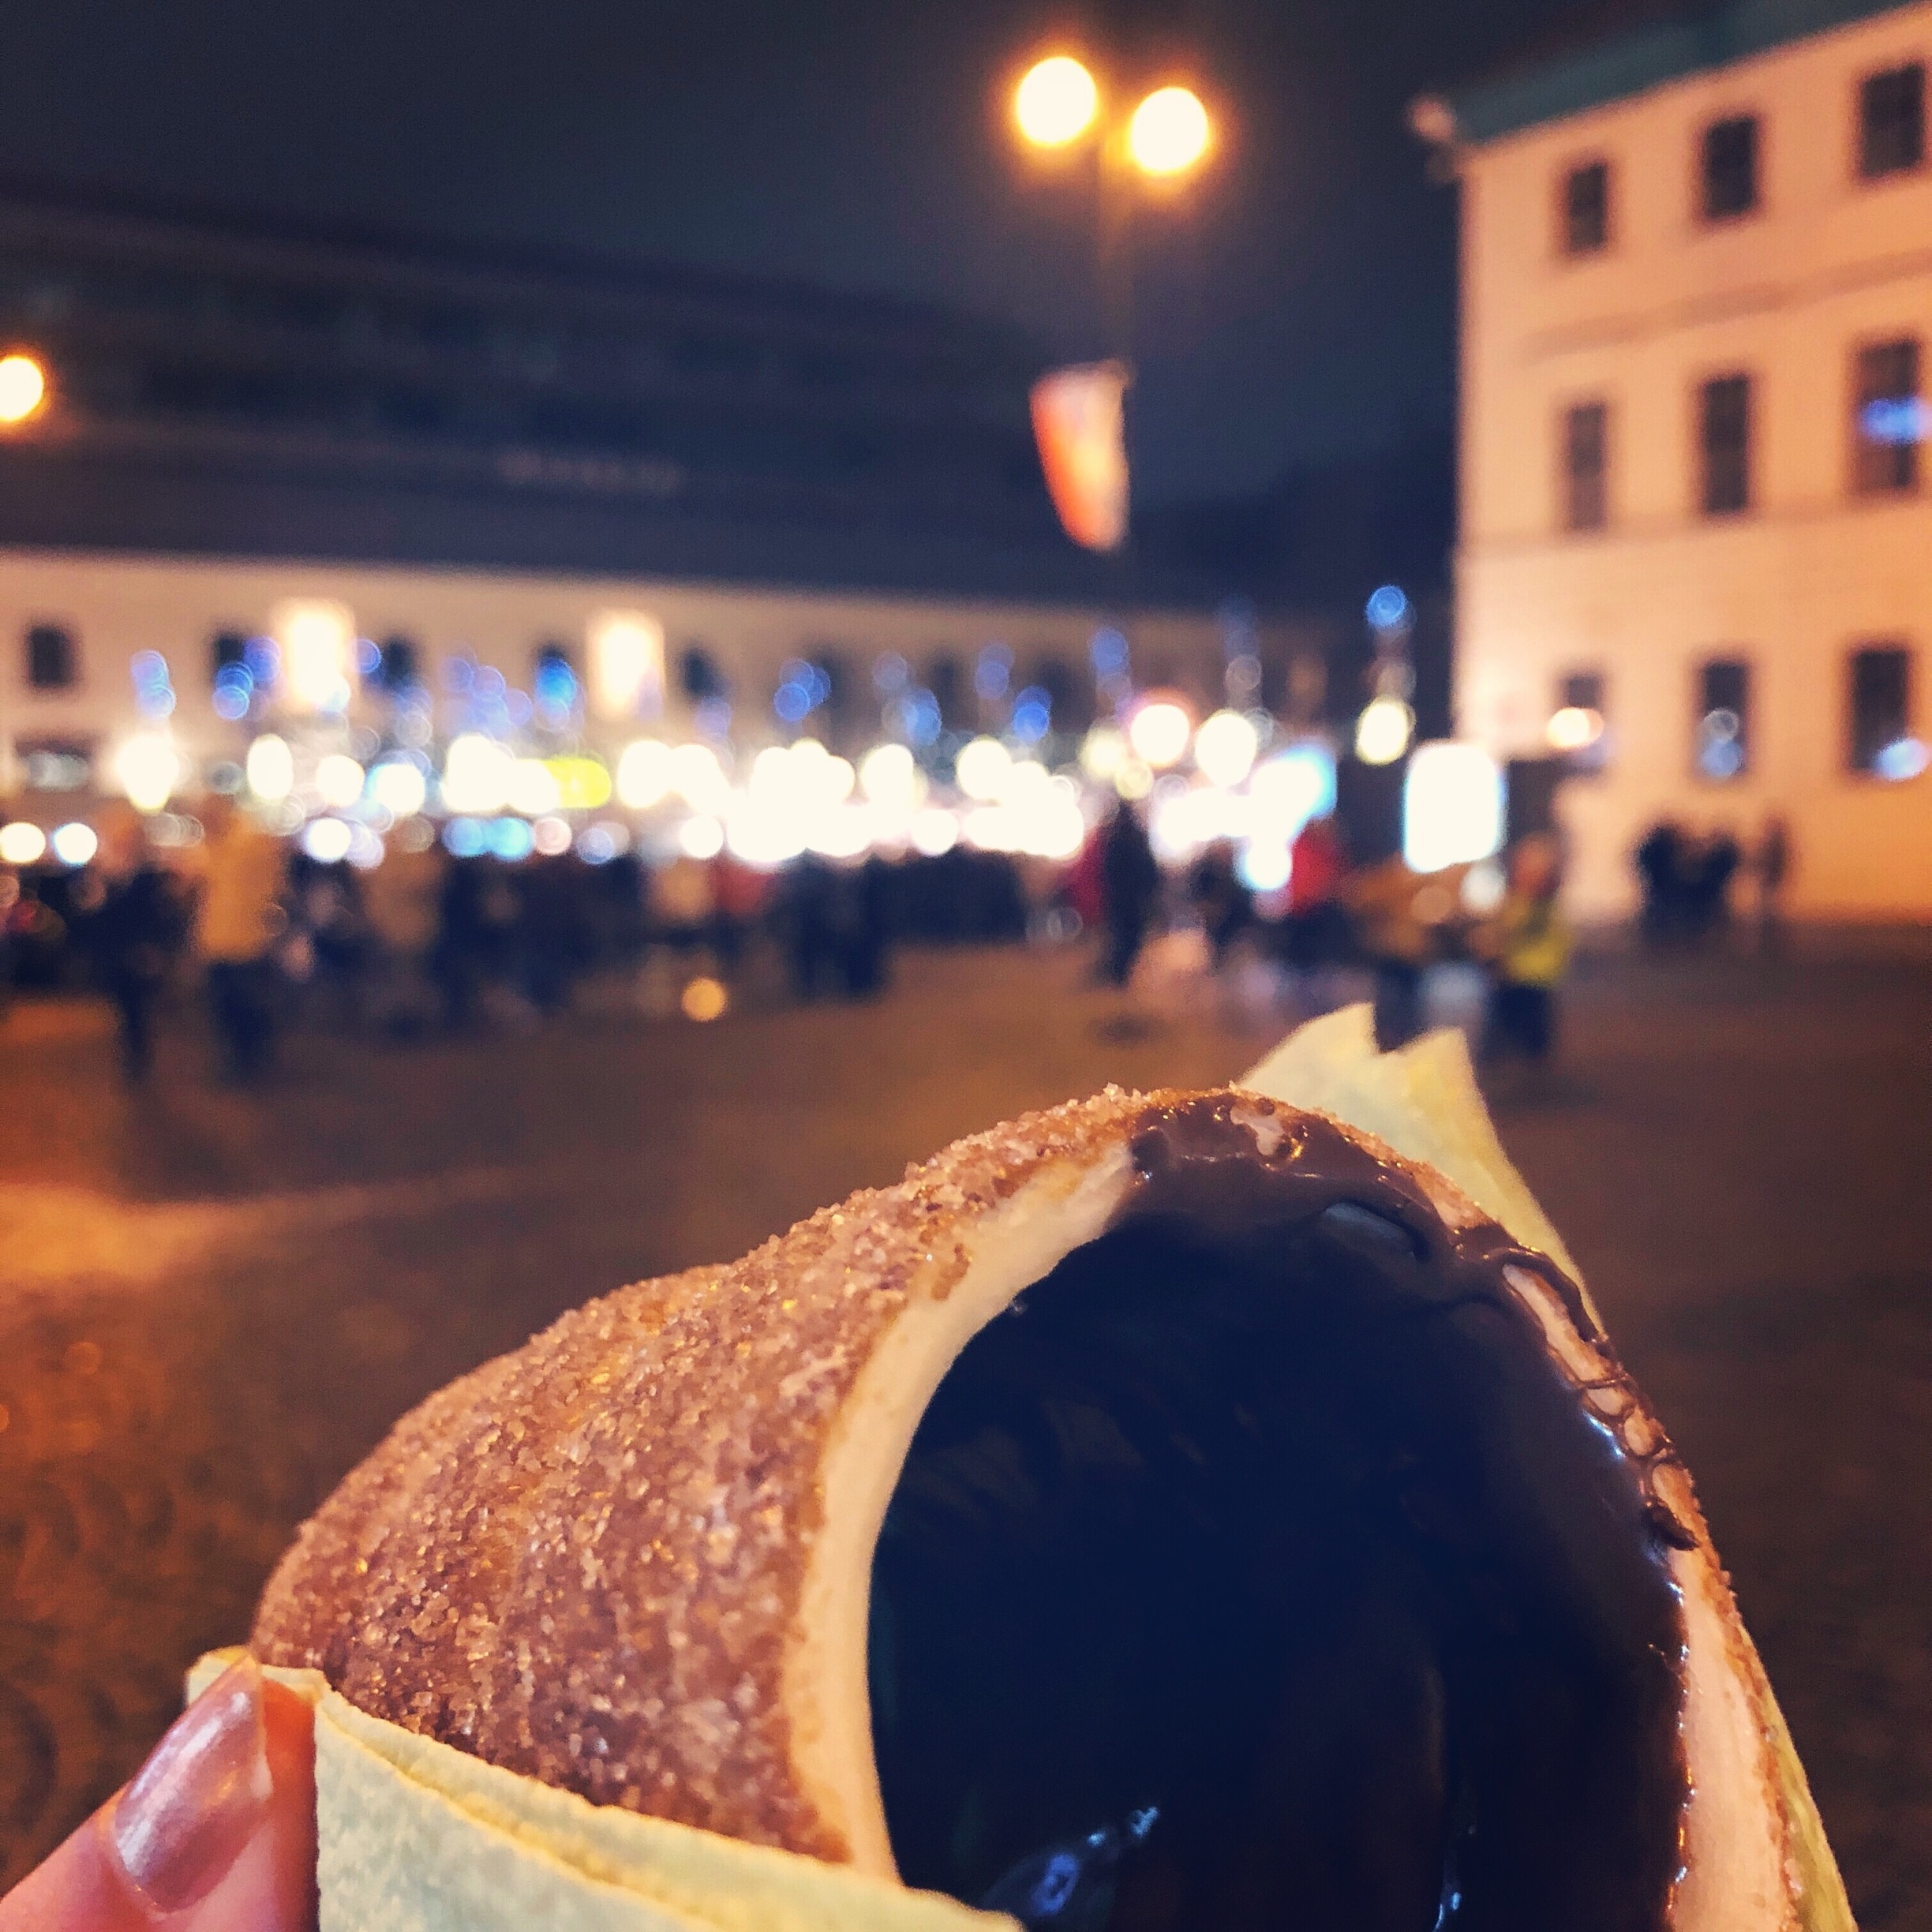 Delicious Trdelnik (Chimney Cake) in the Christmas Market of Náměstí Republiky (Prague - Czech Republic)

#prague #czechrepublic #food #christmasmarket
#europe

December 2018 - Iphone 8